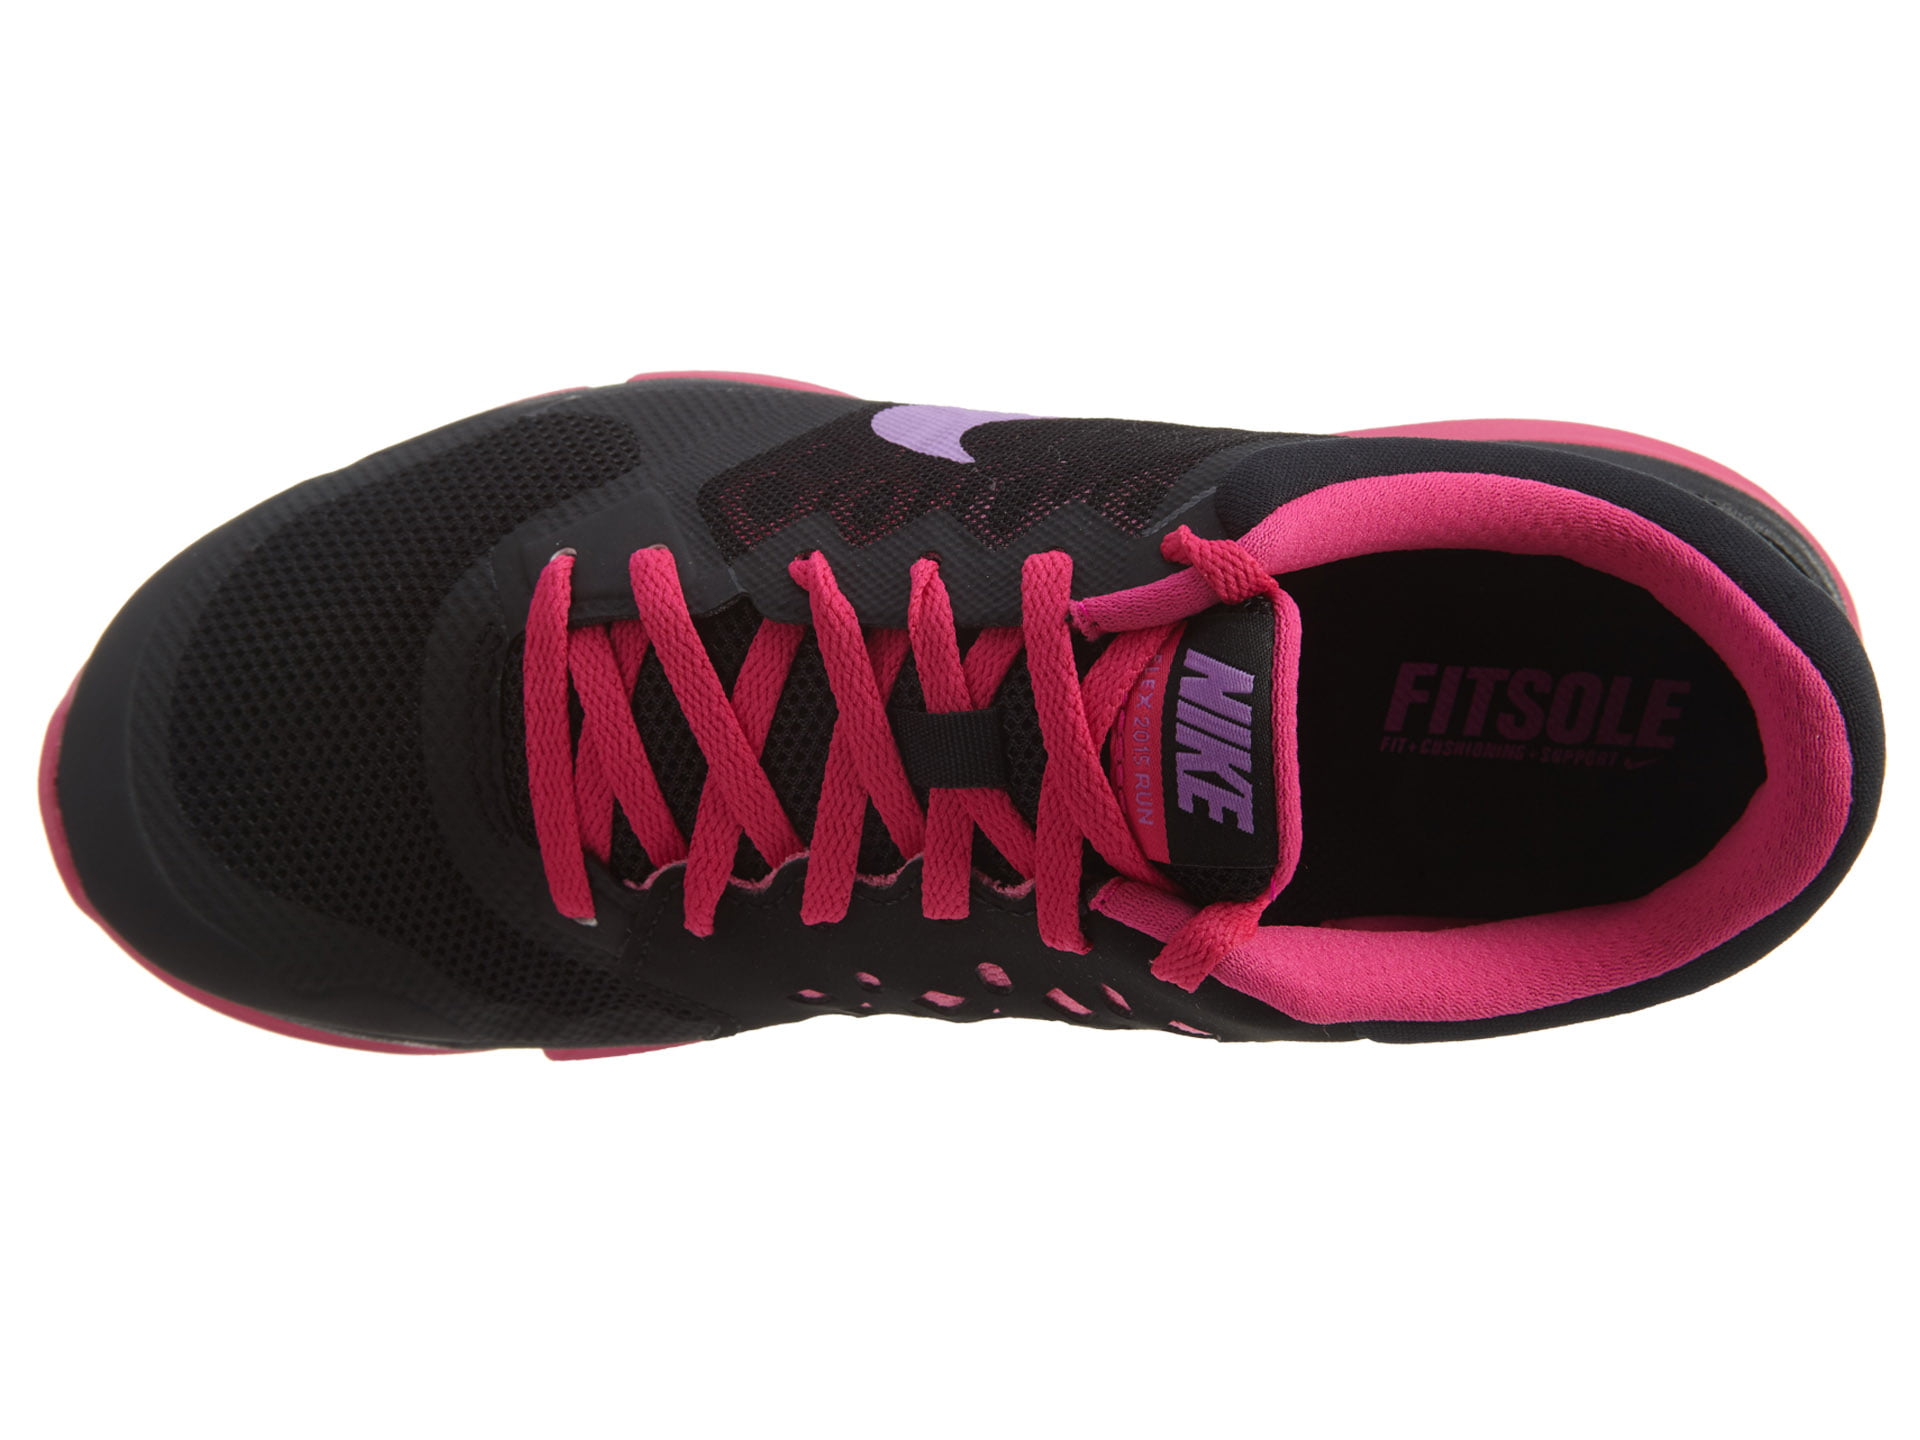 Nike Flex 2015 Rn Msl Style : 724987 Walmart.com